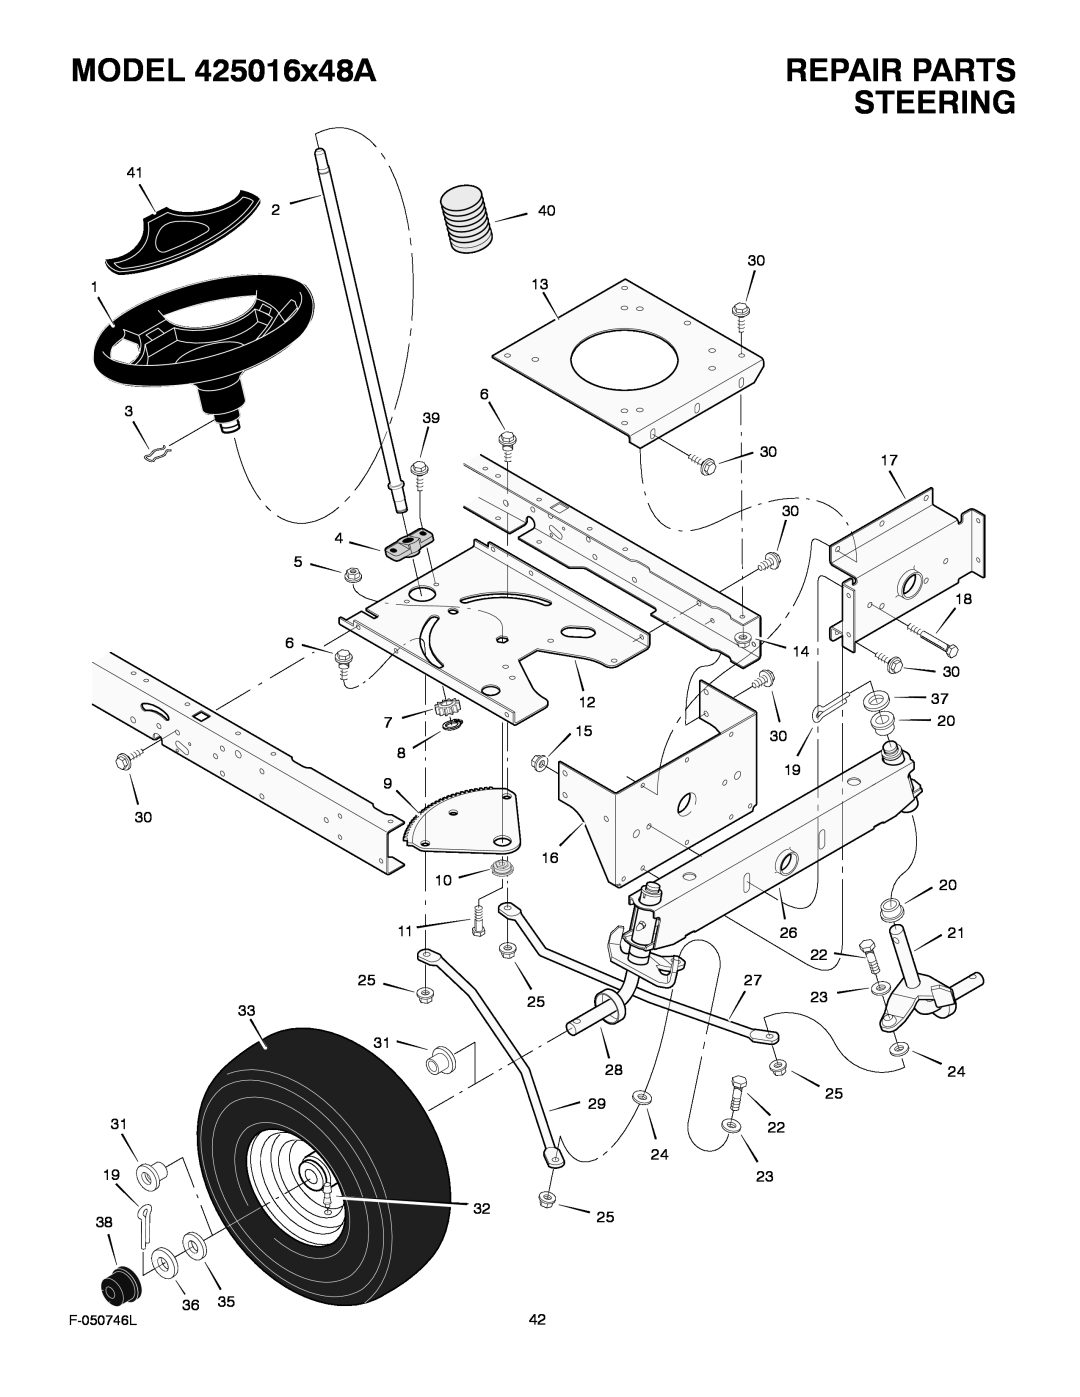 Murray manual Repair Parts Steering, MODEL 425016x48A, F-050746L 